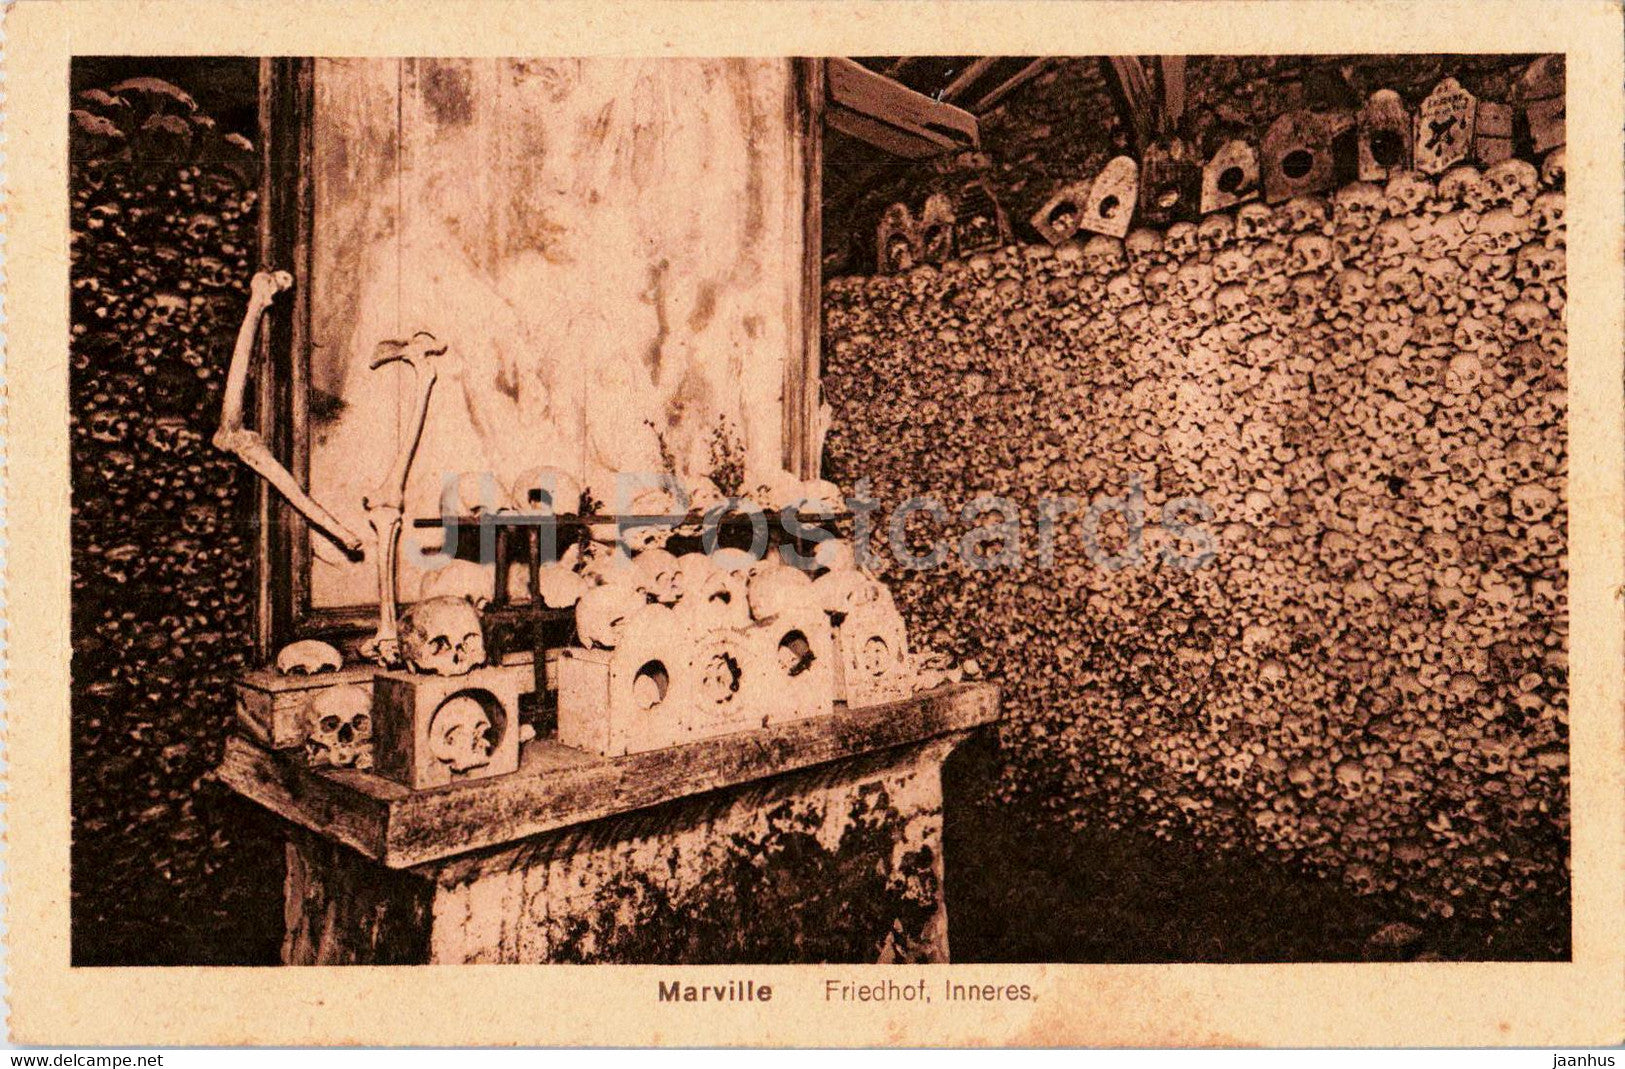 Marville - Friedhof Inneres - old postcard - France - unused - JH Postcards